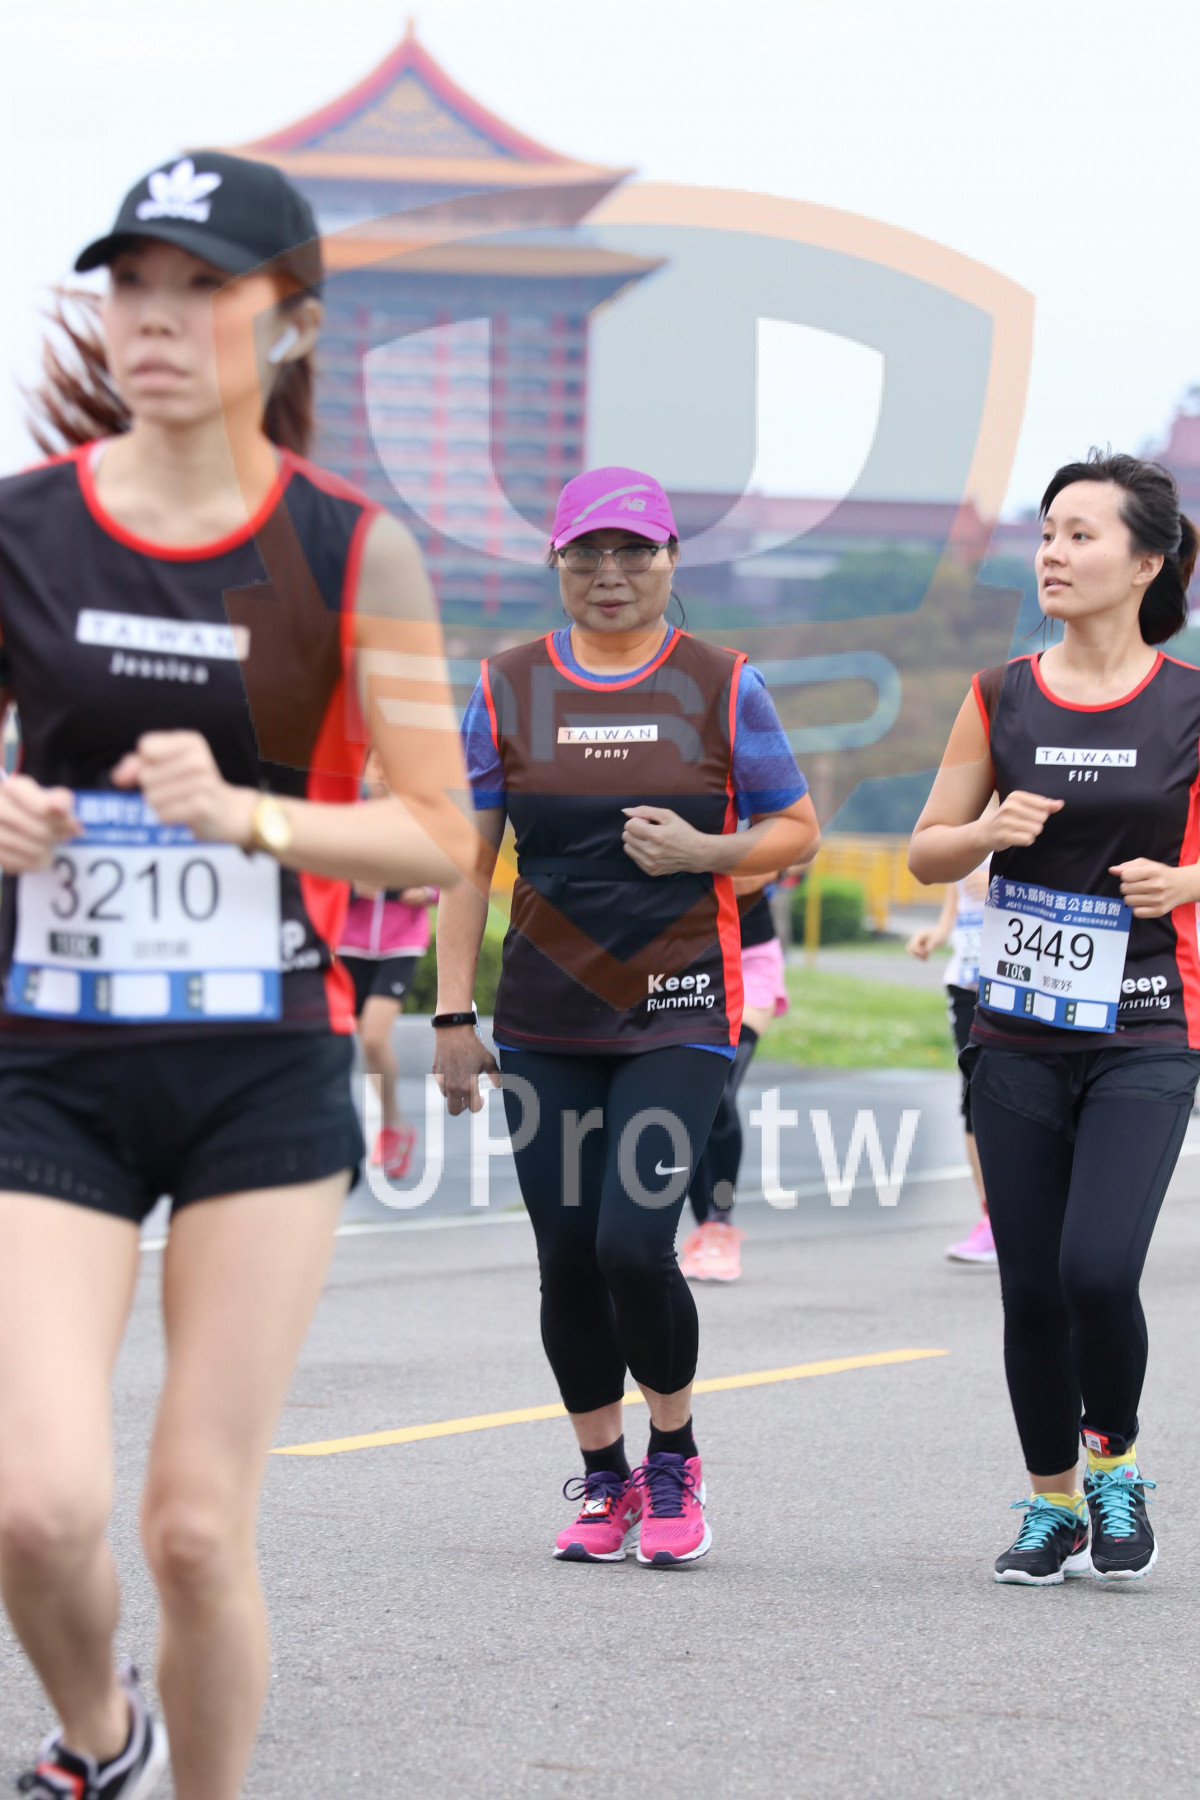 Panny,FIFI,3210,,3449,Keep,running,eep|2018 第九屆阿甘盃公益路跑|Soryu Asuka Langley